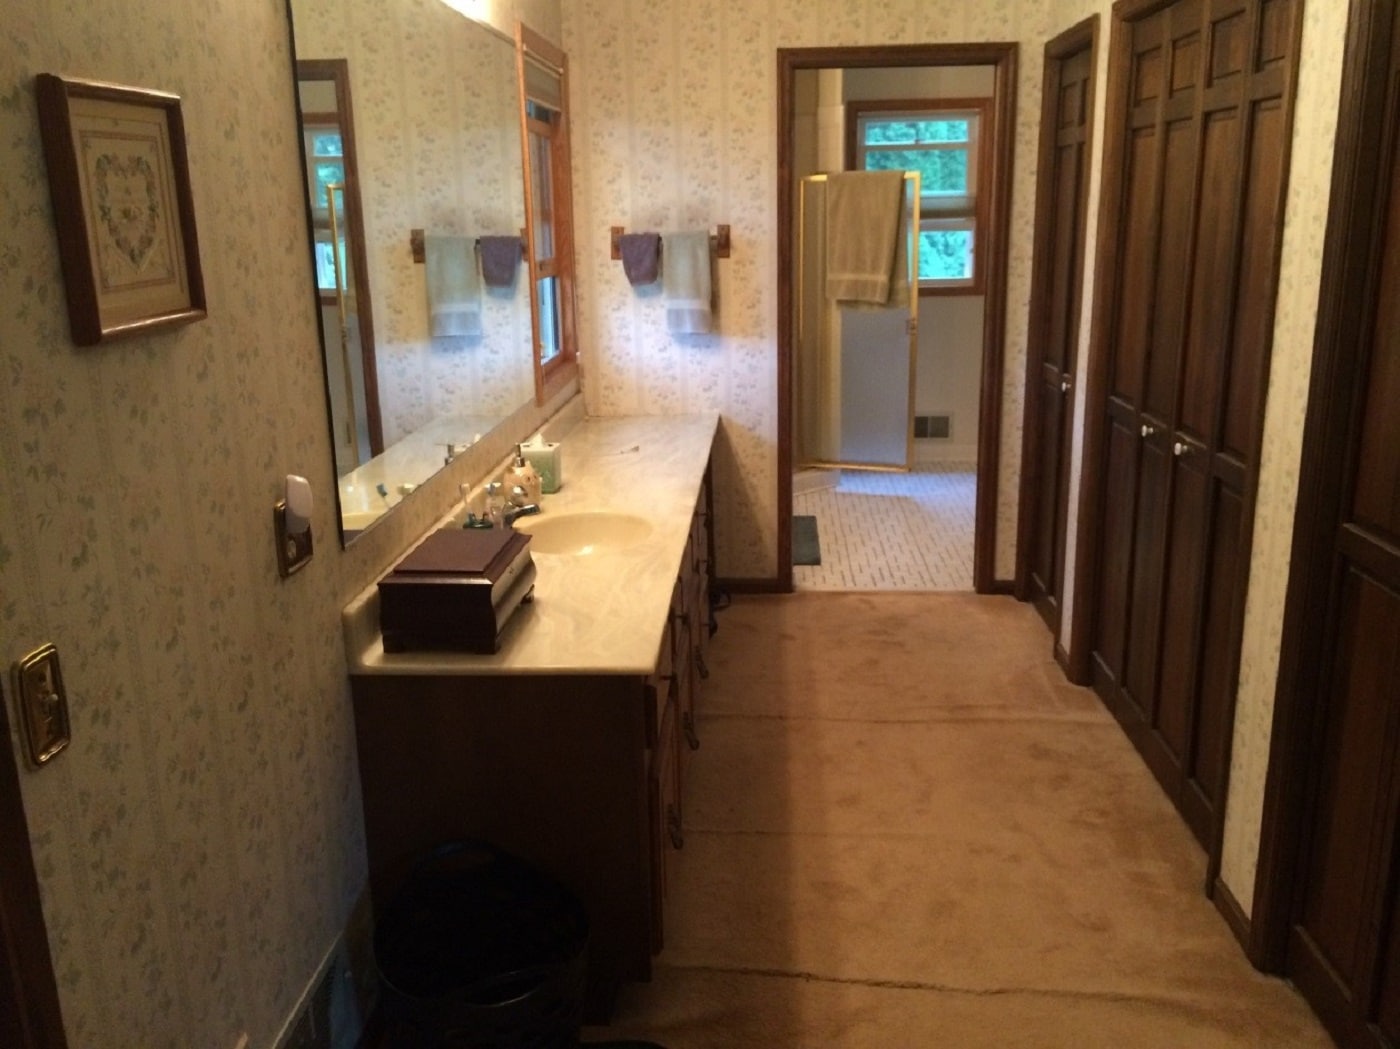 bathroom before interior remodeling